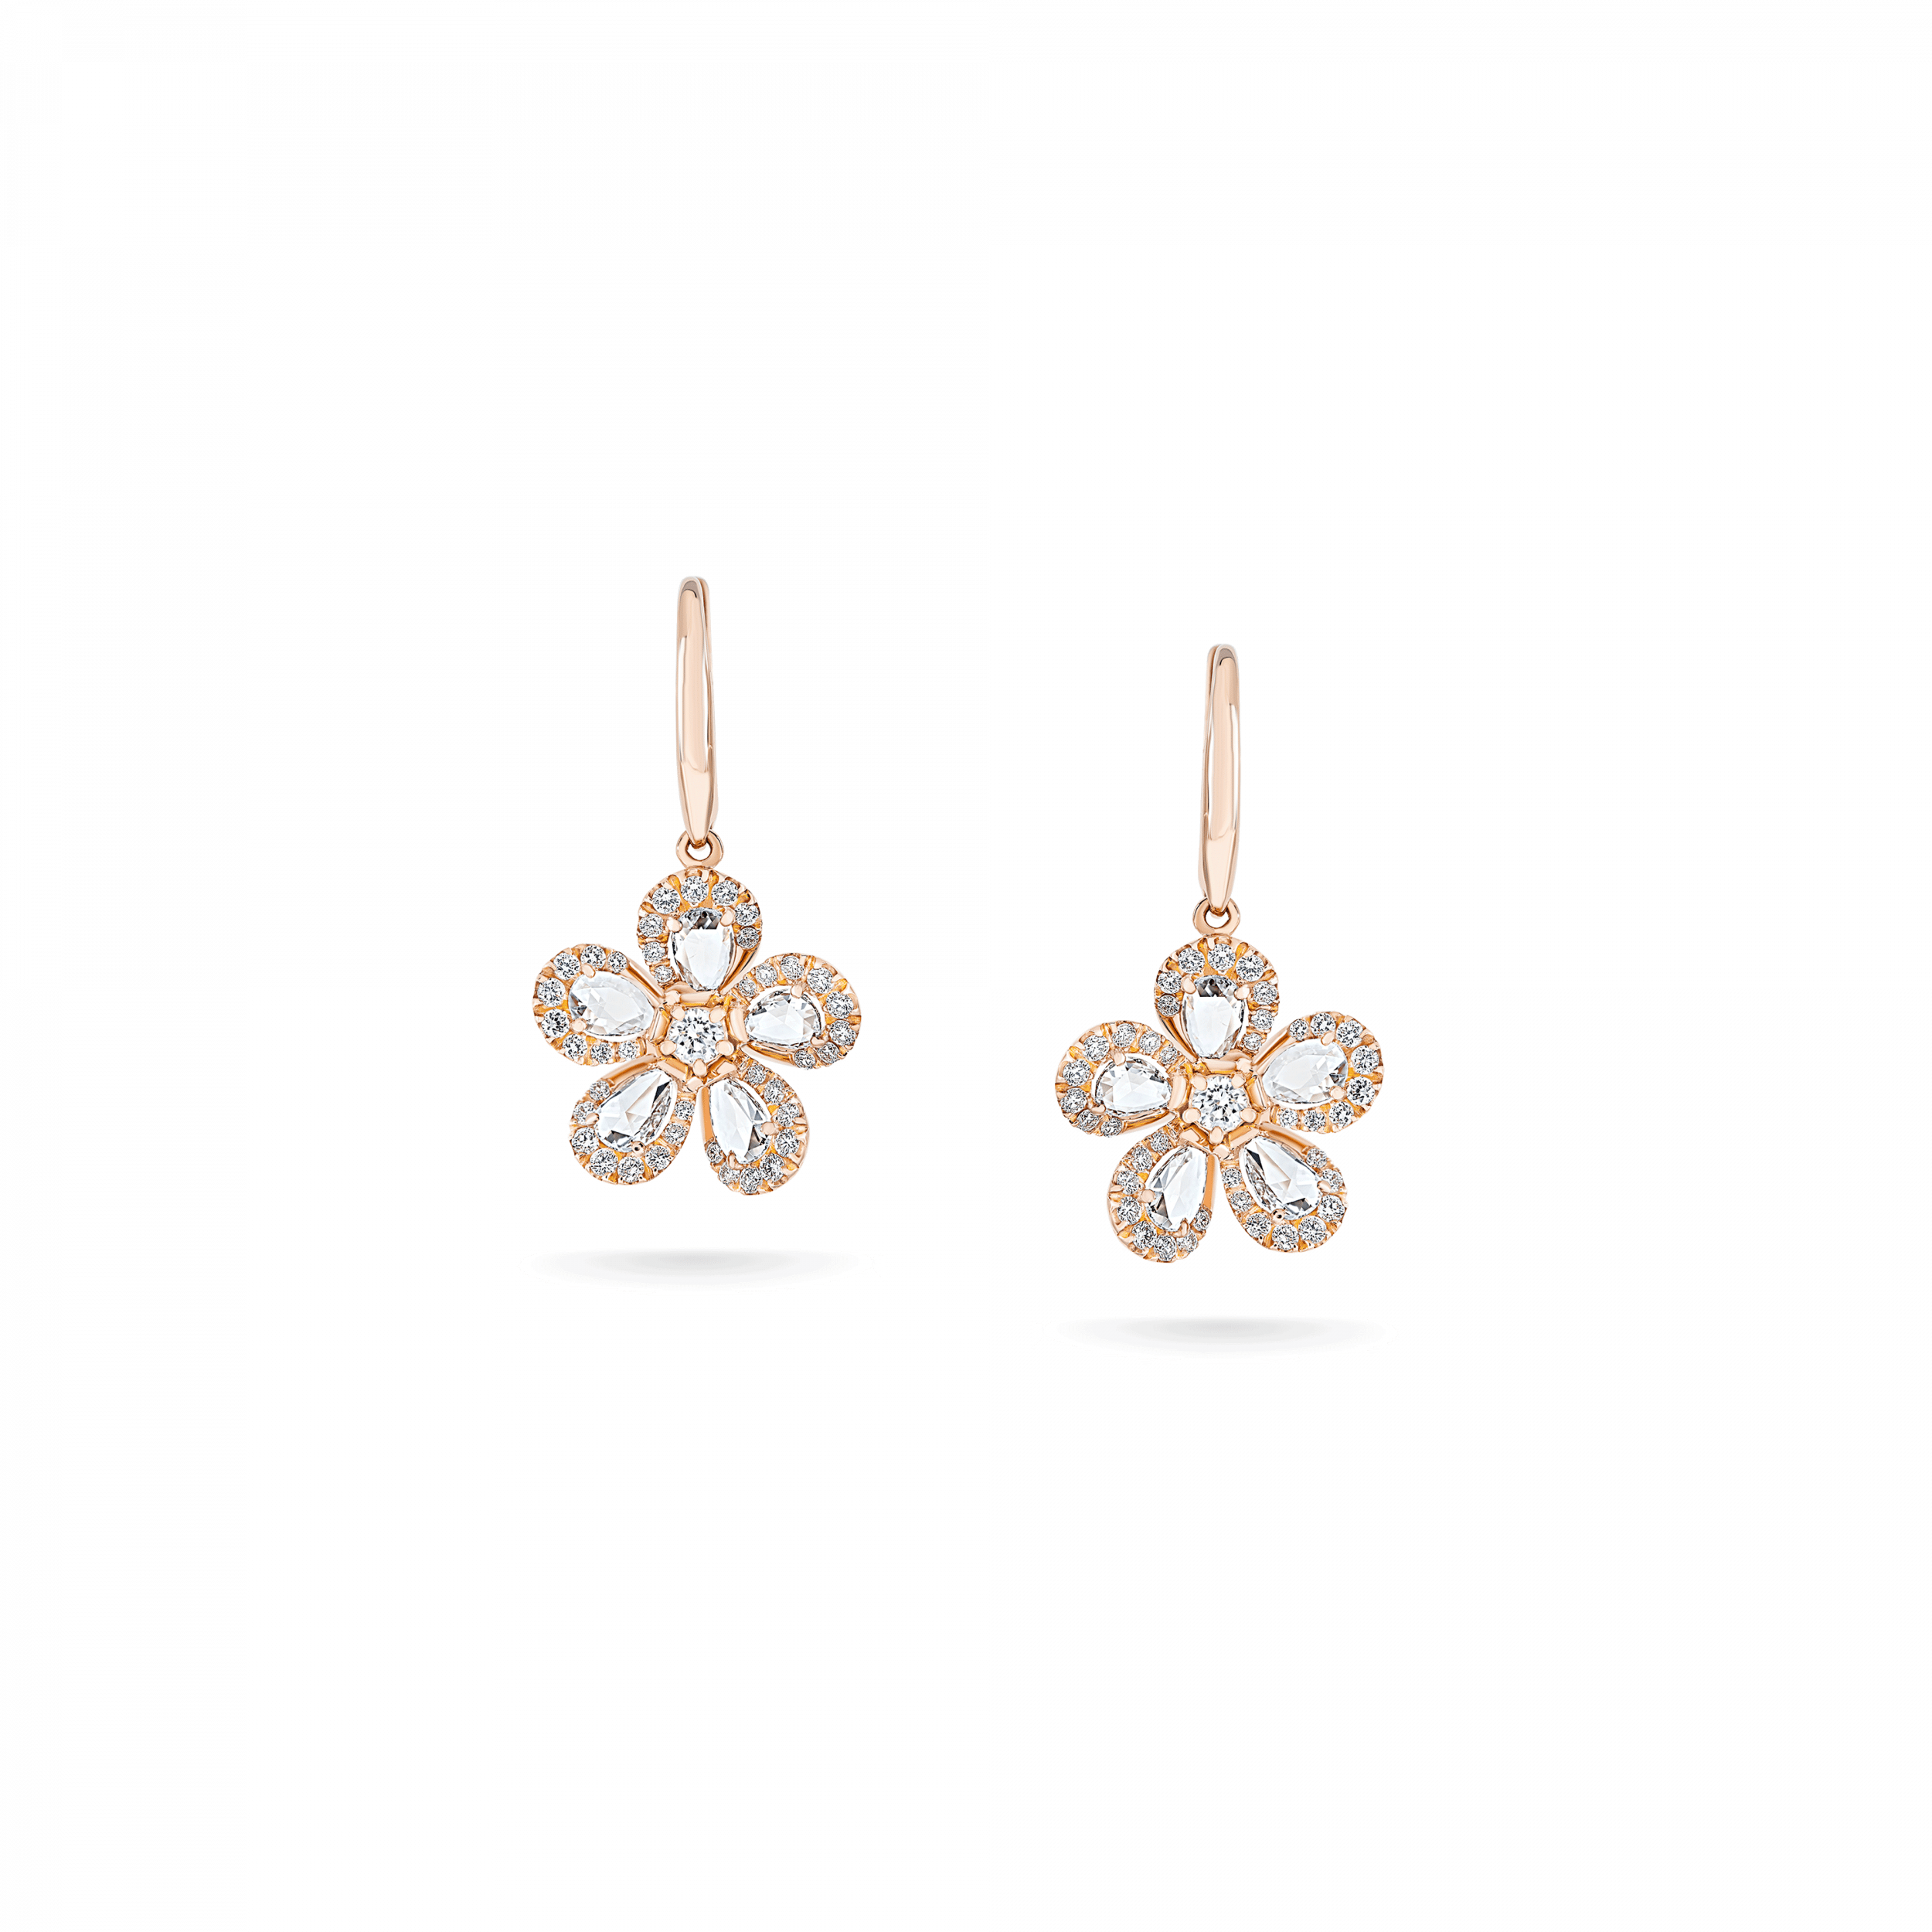 Image for miss daisy drop earrings